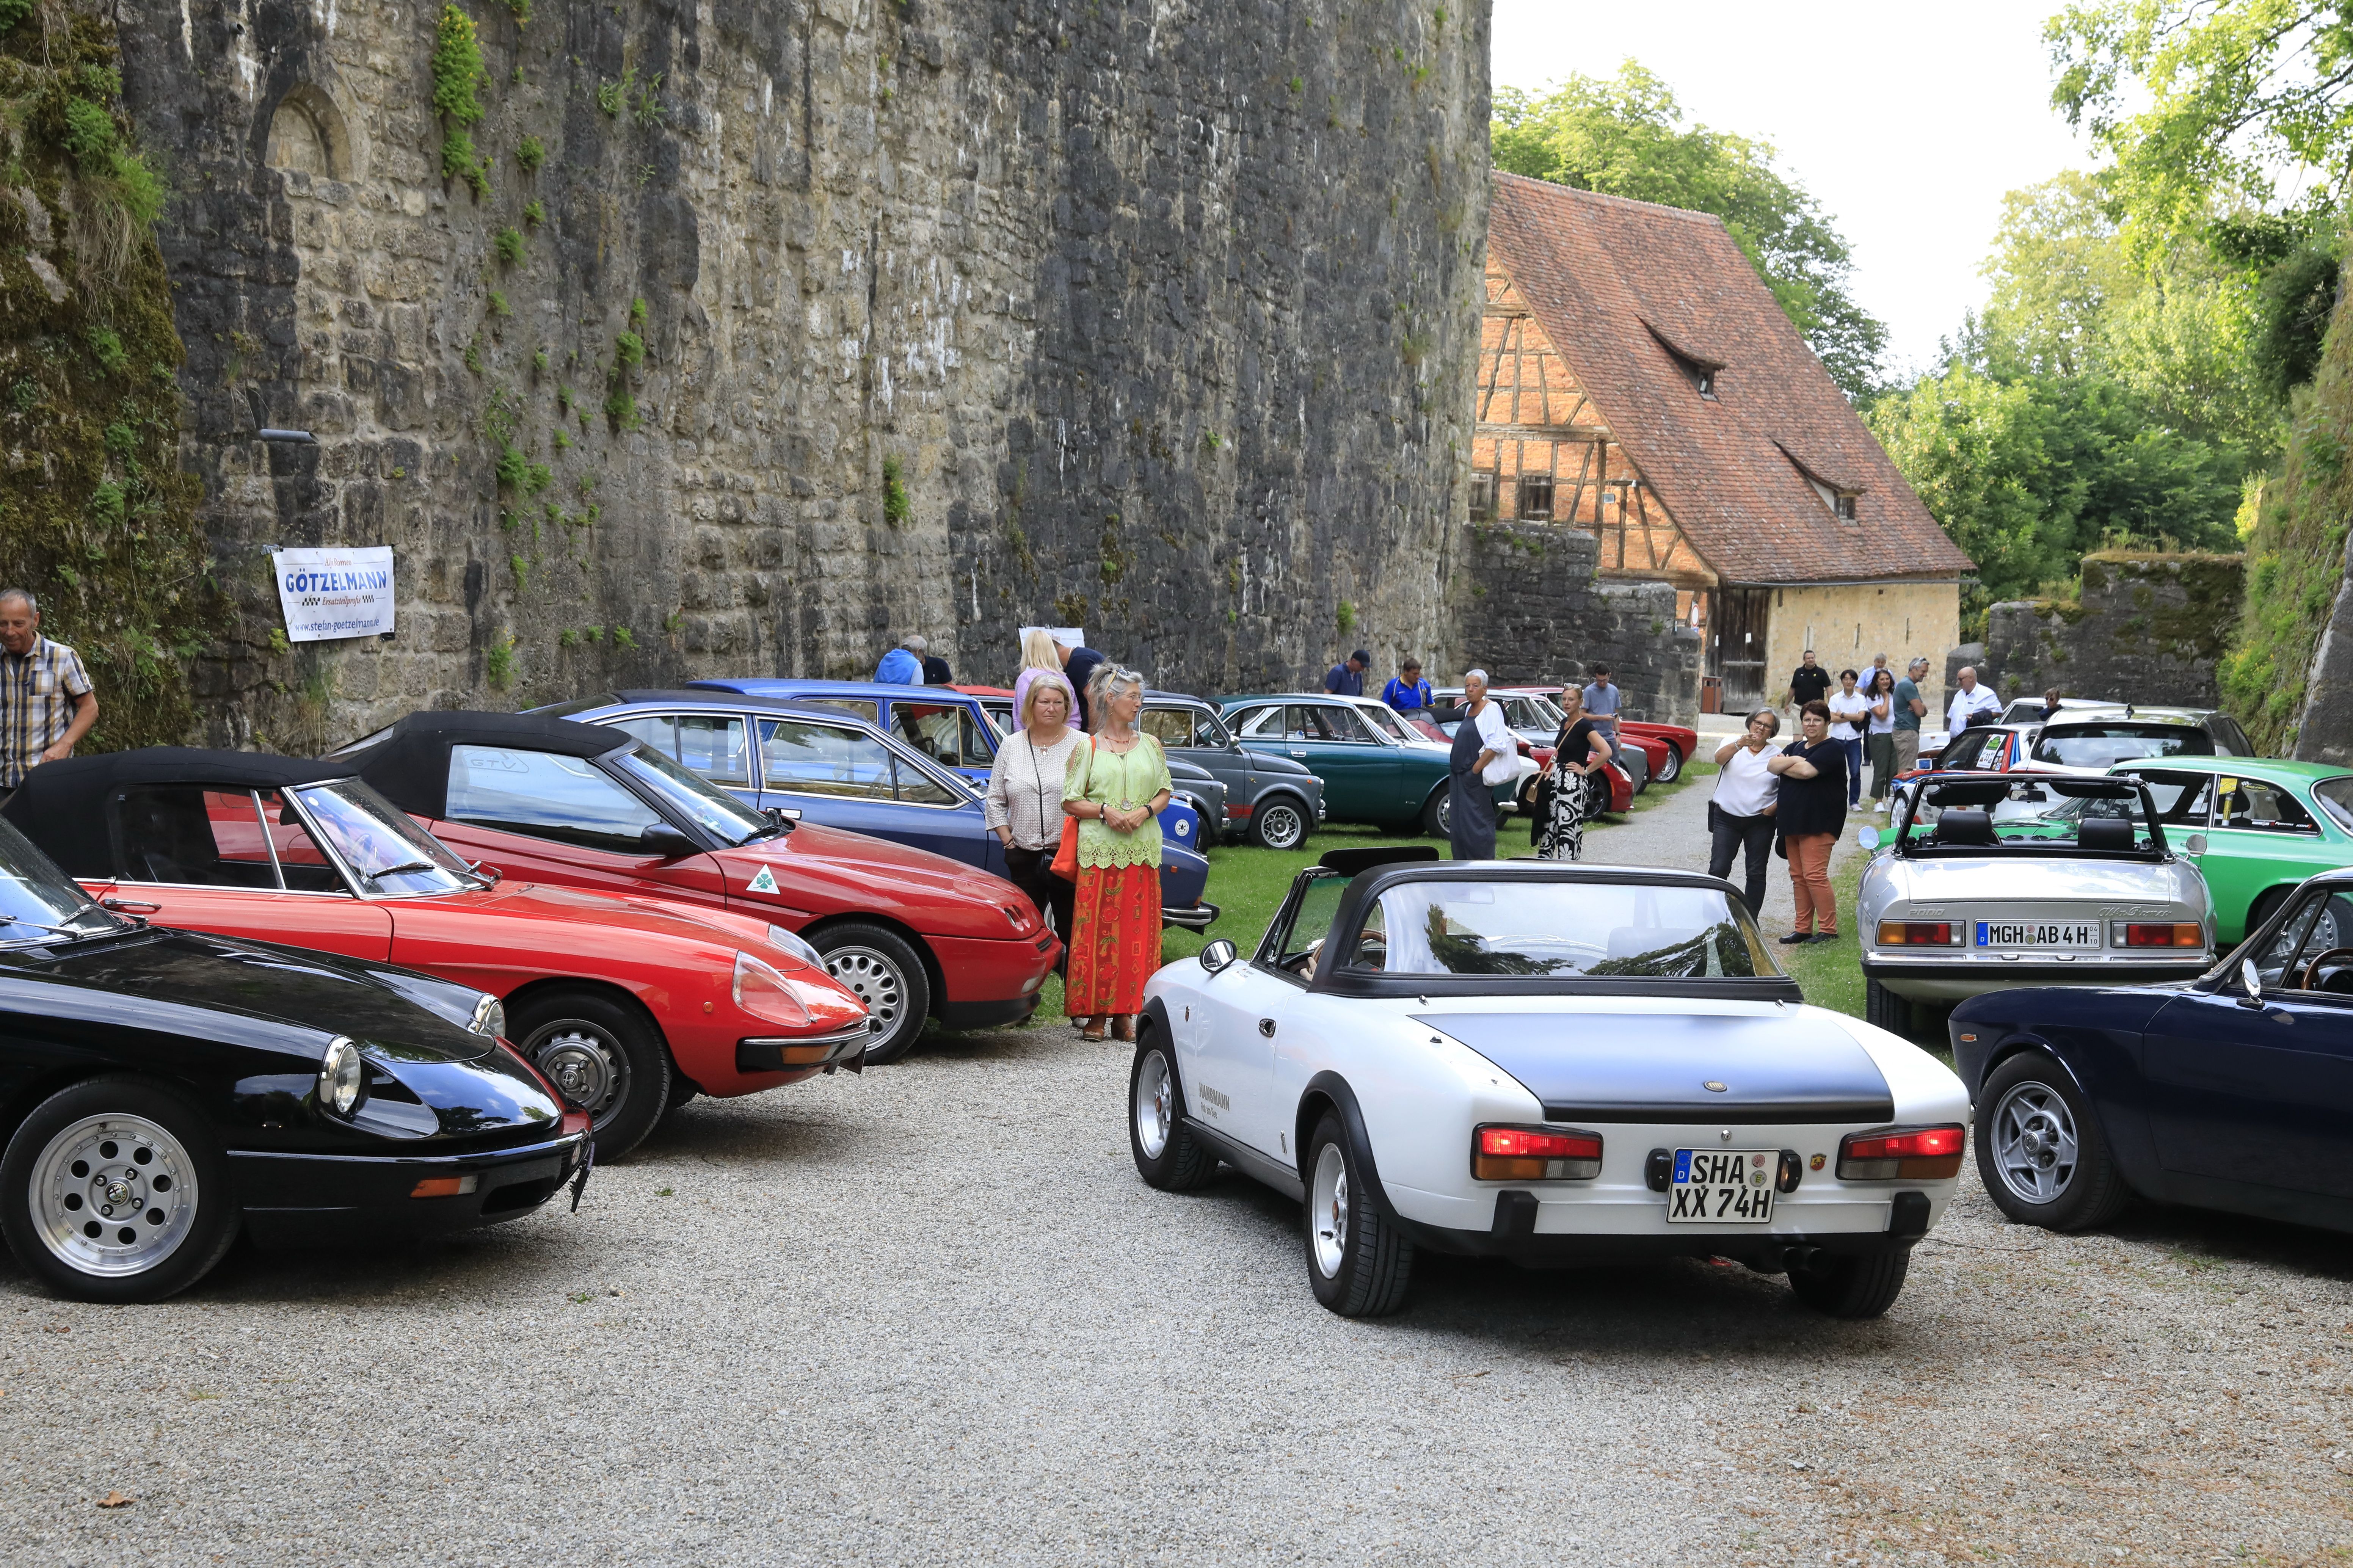 Castle & Cars - Italy, Langenburg